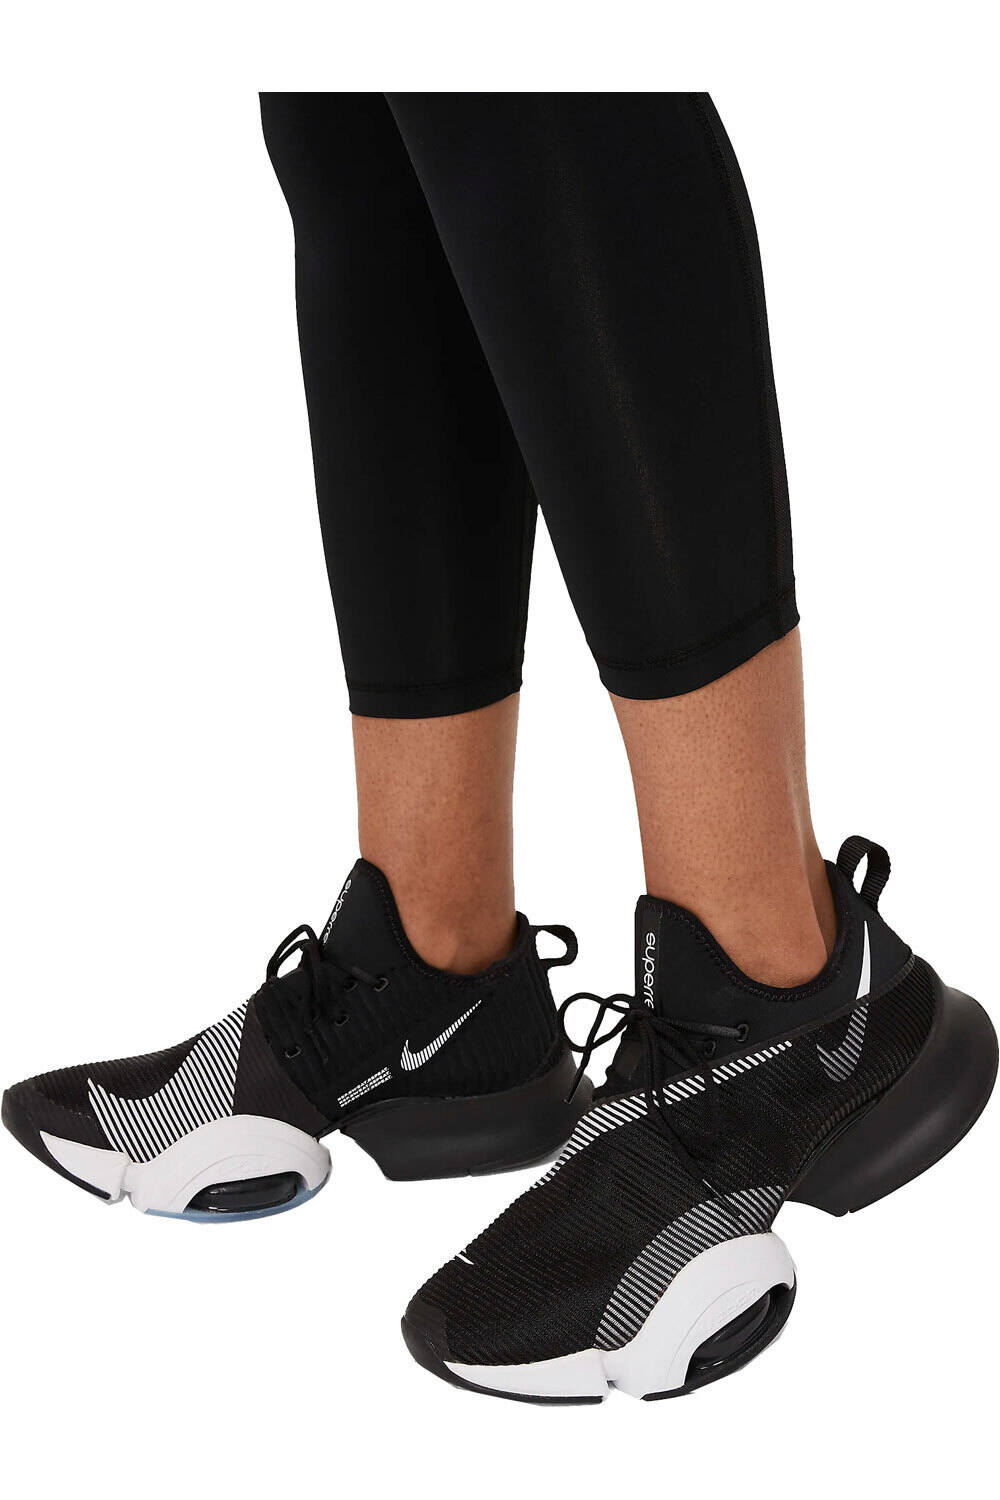 Nike pantalones y mallas largas fitness mujer W NP 365 TIGHT 7/8 HI RISE 03